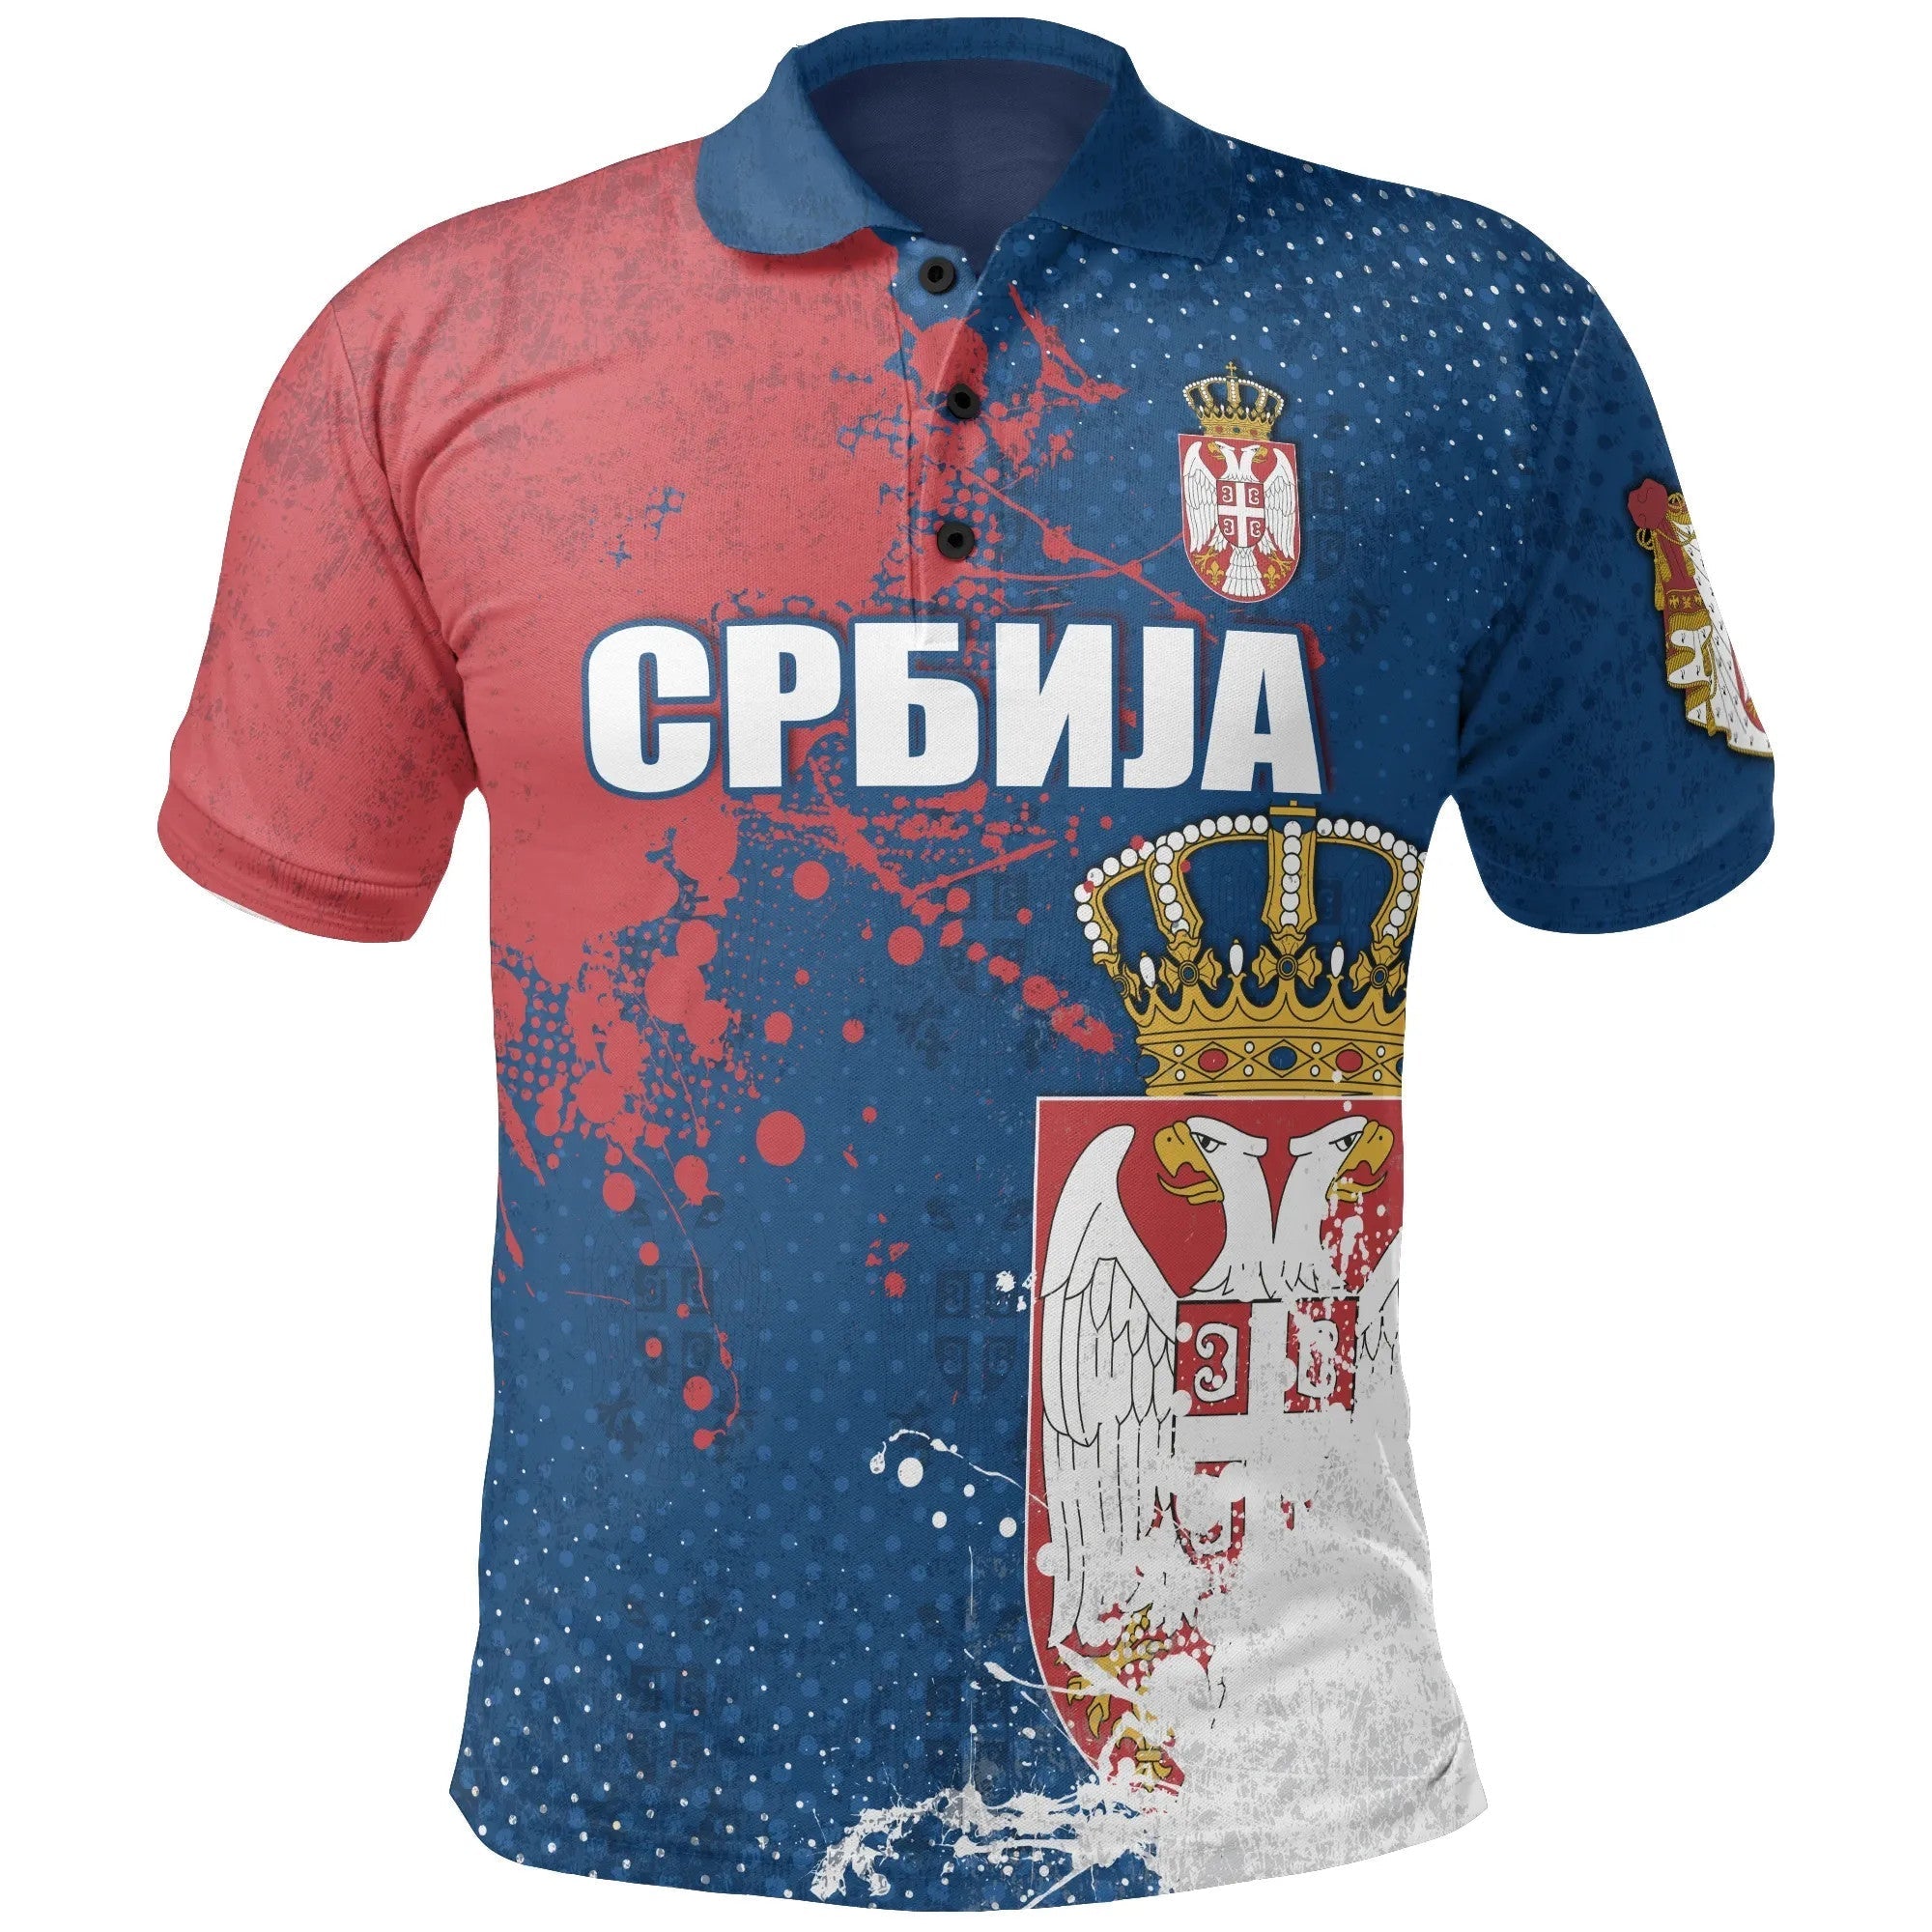 serbia-polo-shirt-the-great-serbia-serbian-language